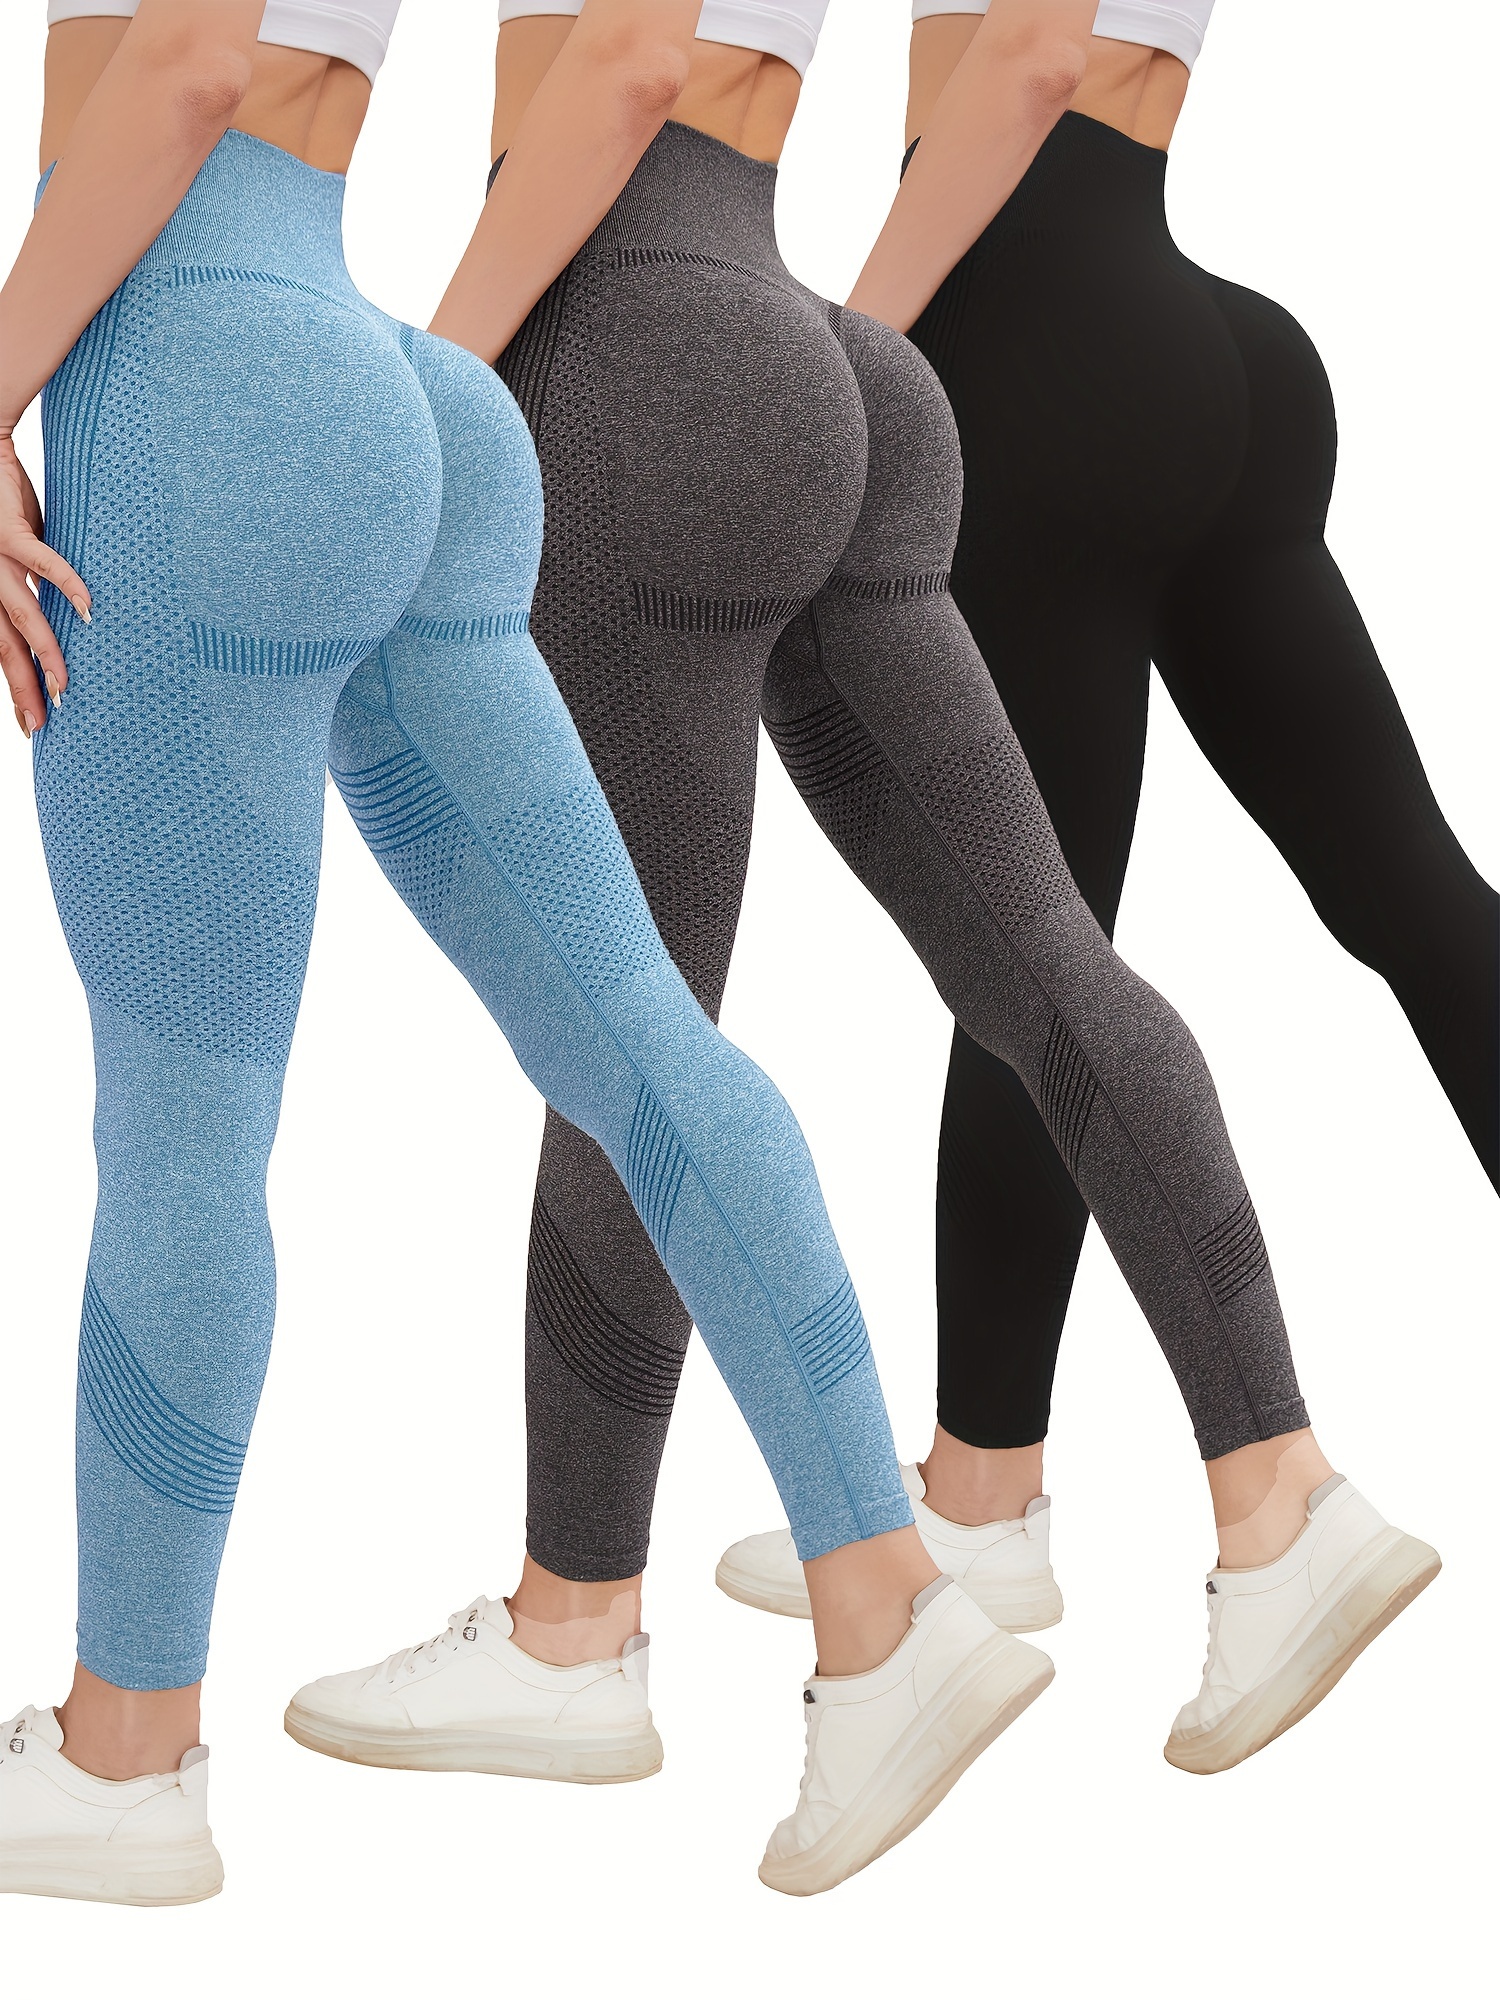 Hfyihgf Women's High Waisted Butt Lift Leggings Soft Tummy Control